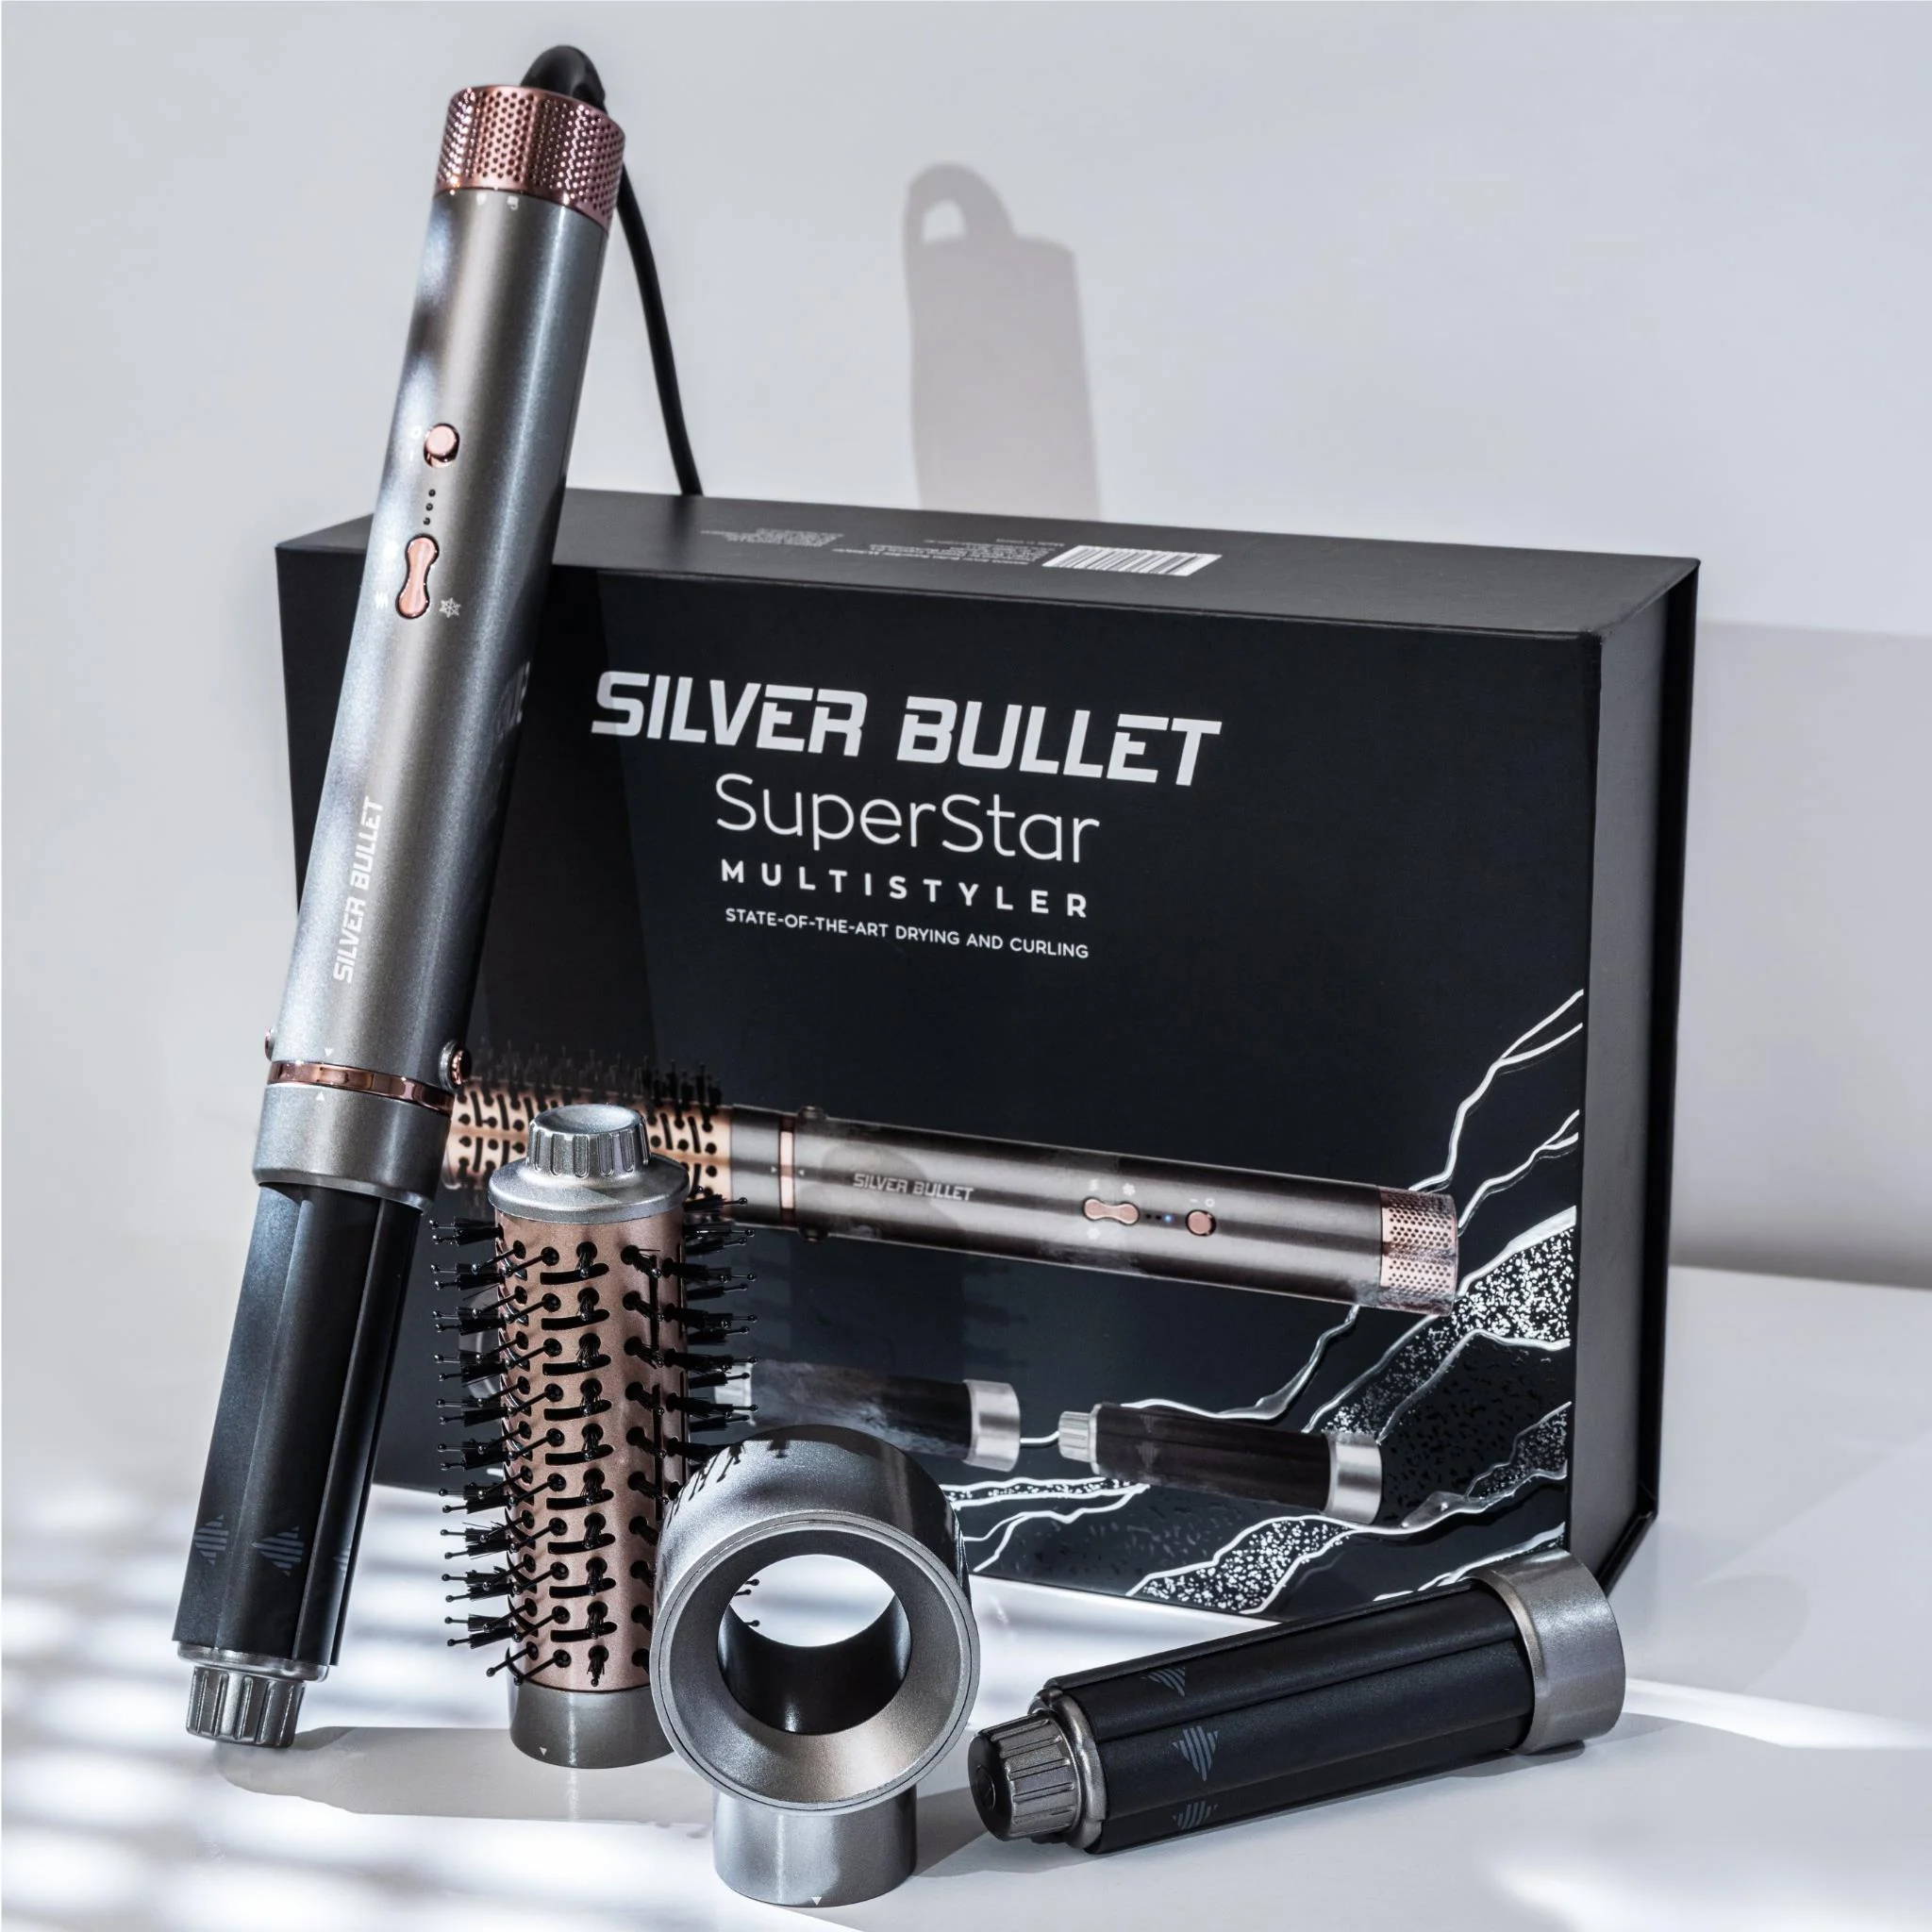 Silver Bullet Platinum SuperStar Airwrap Multistyler 